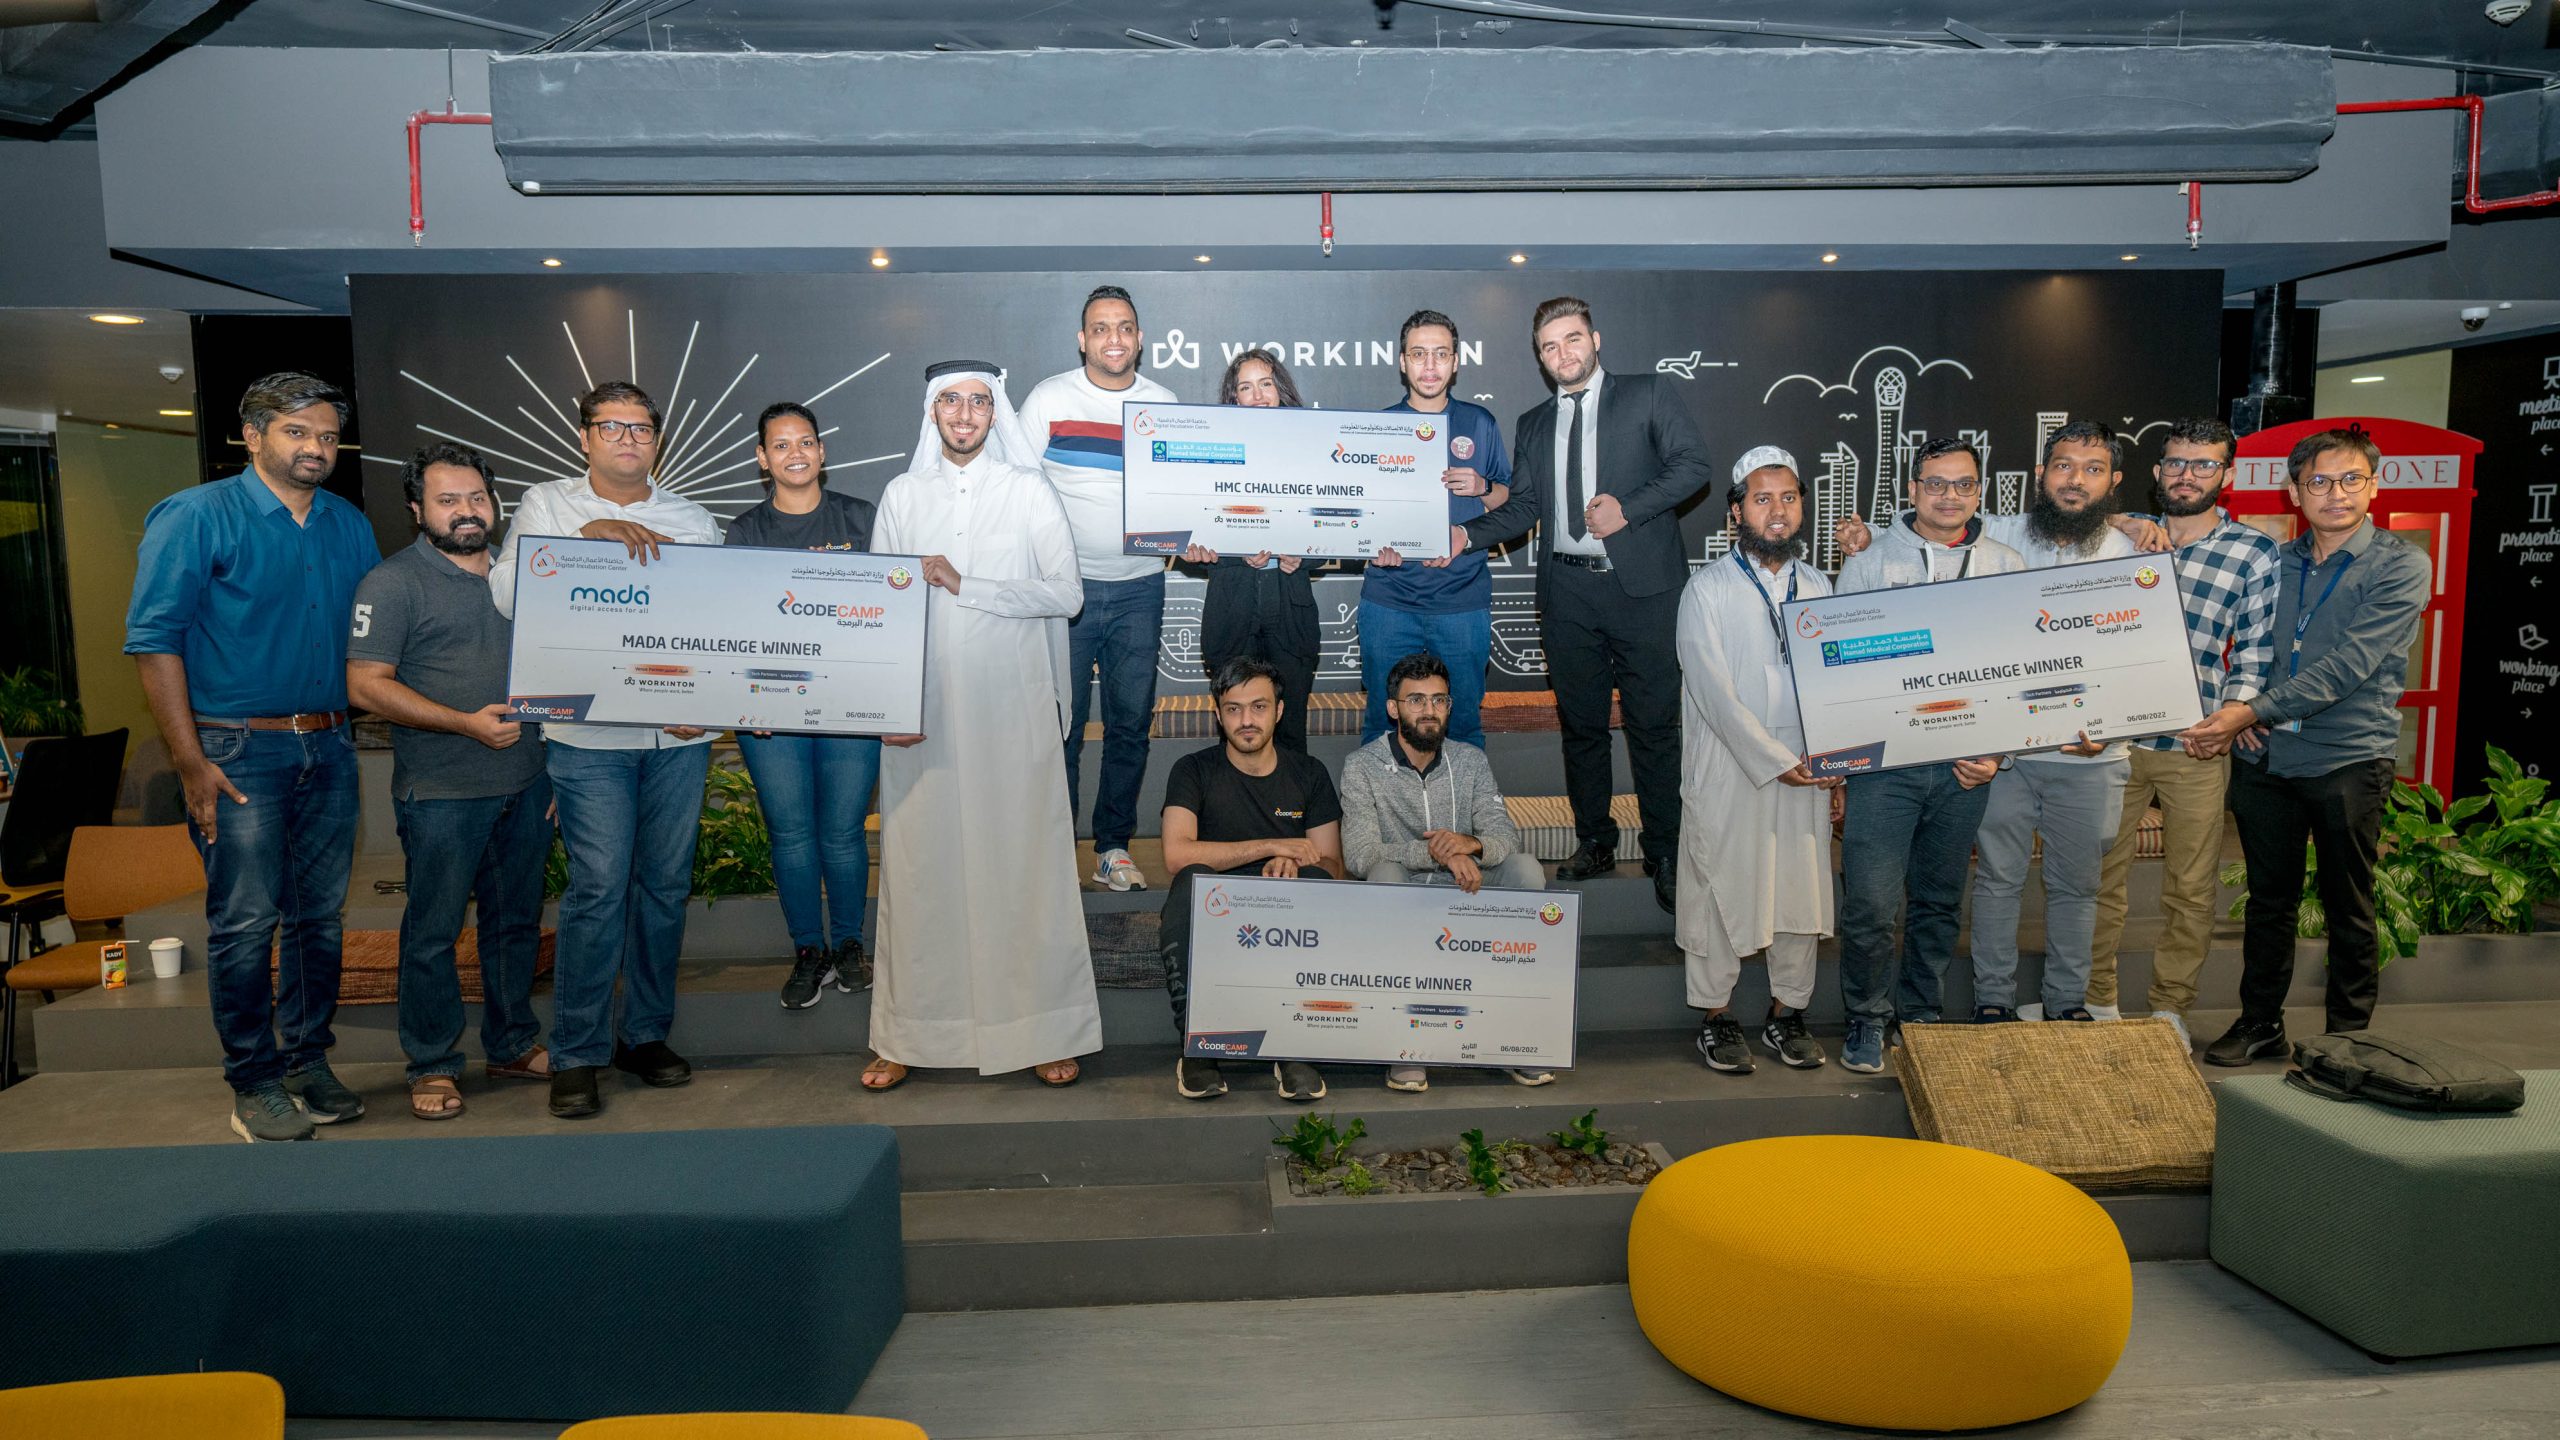 Winners of the Codecamp Hackathon